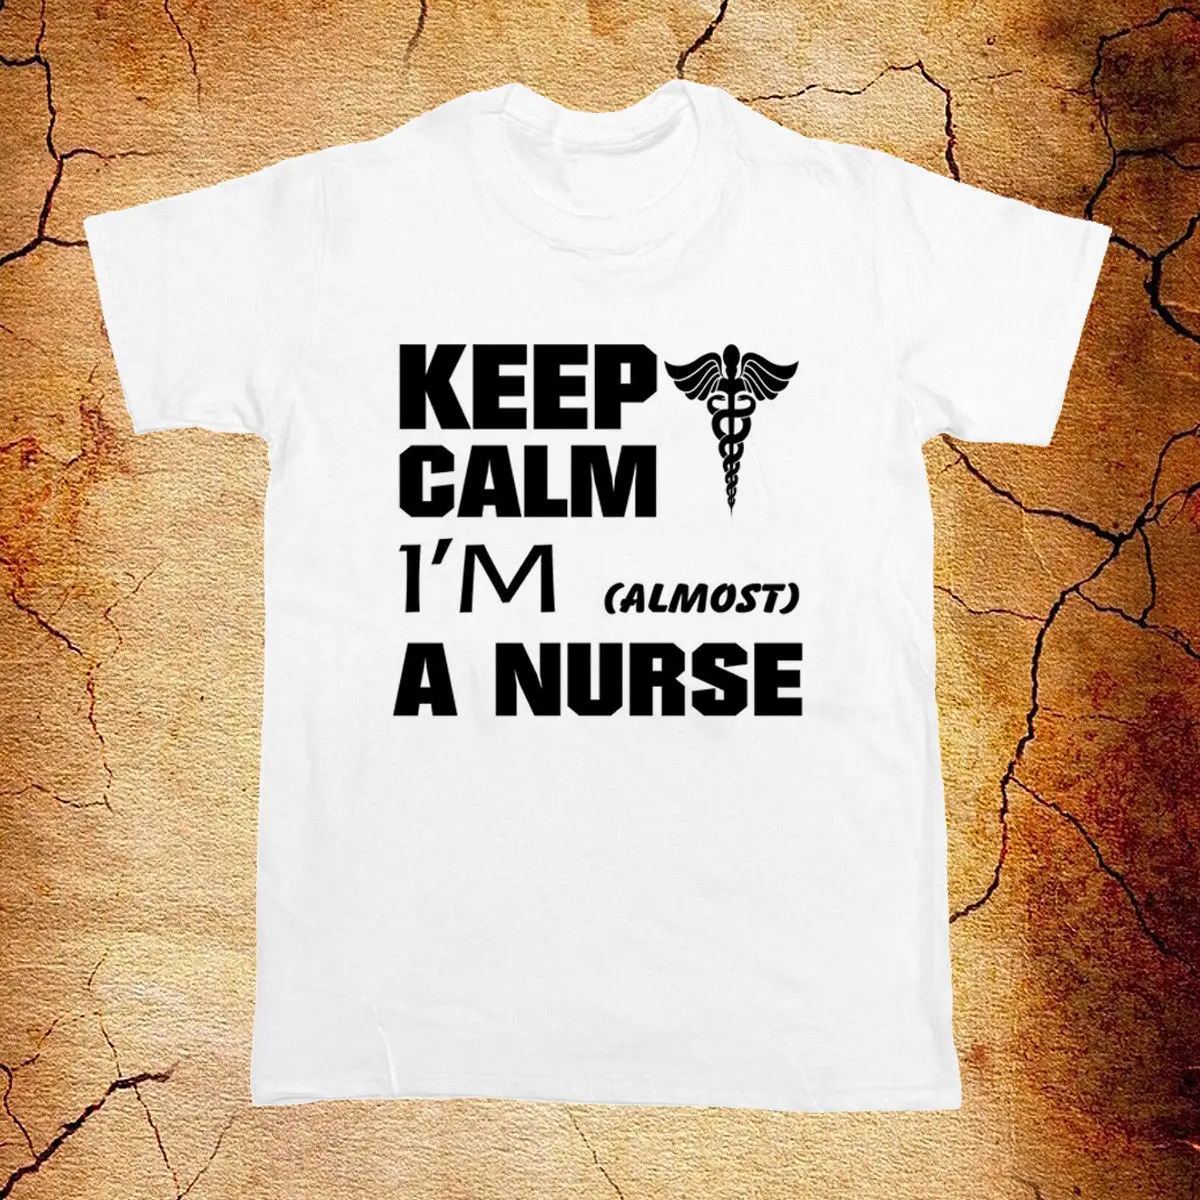 

2019 Summer Fashion Hot Sale Men O-Neck T Shirt Keep calm i'm (almost) a nurse white t shirt